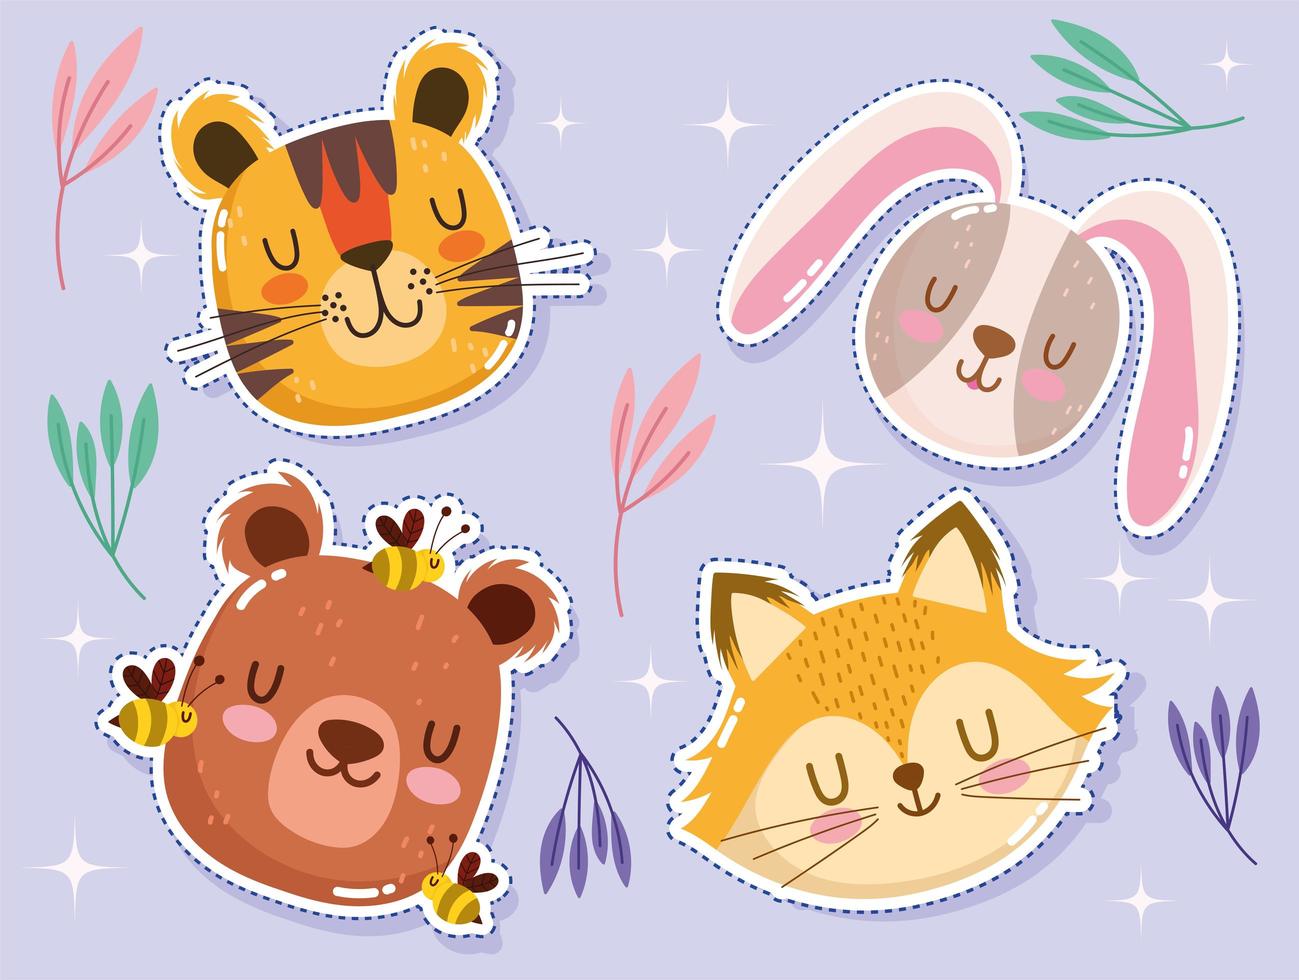 Adorable little tiger, rabbit, fox, bear, and bees vector